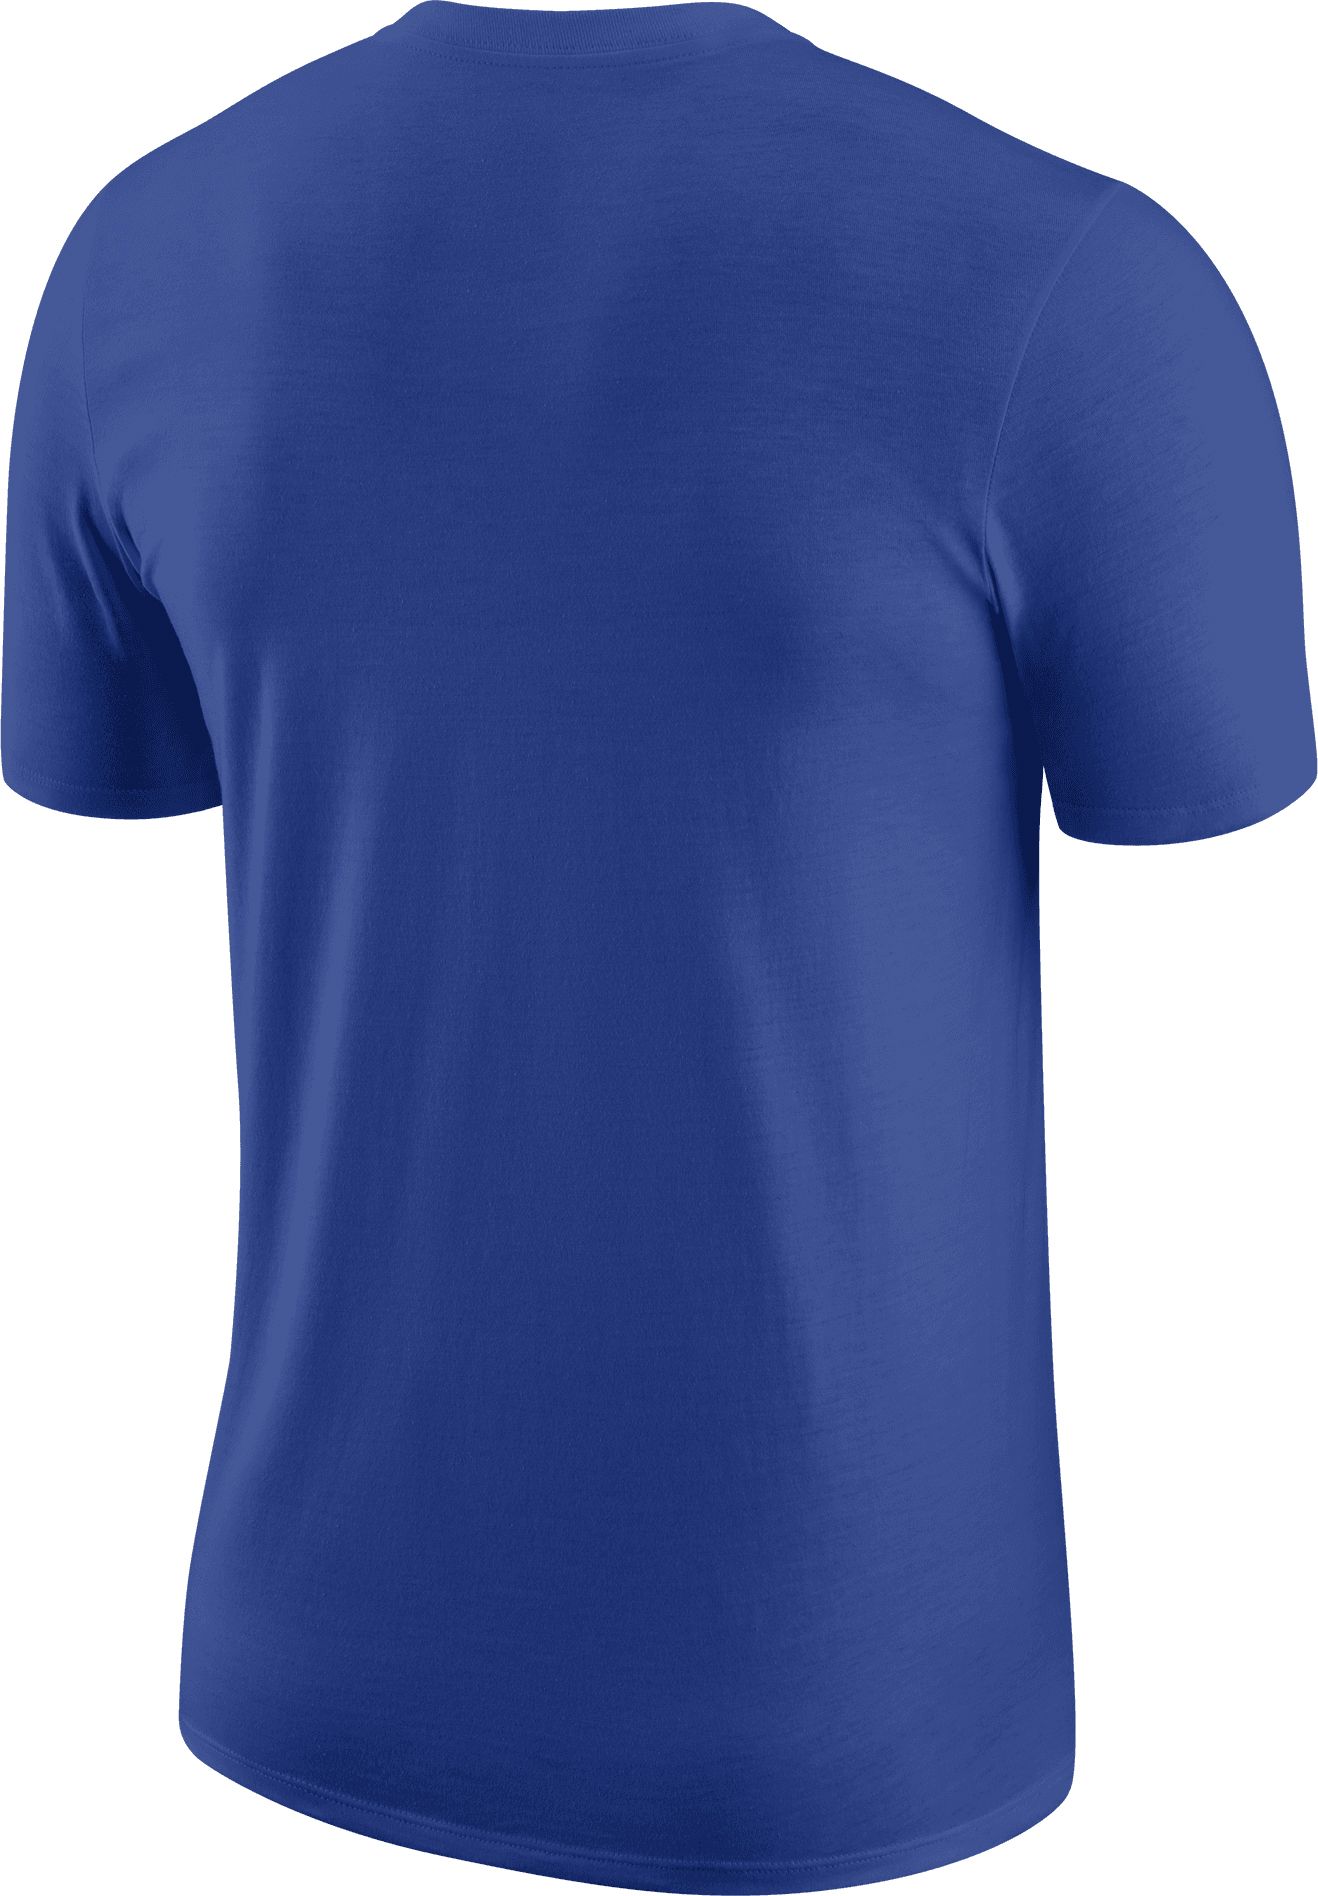 Nike Men's Golden State Warriors Blue Essential Logo T-Shirt